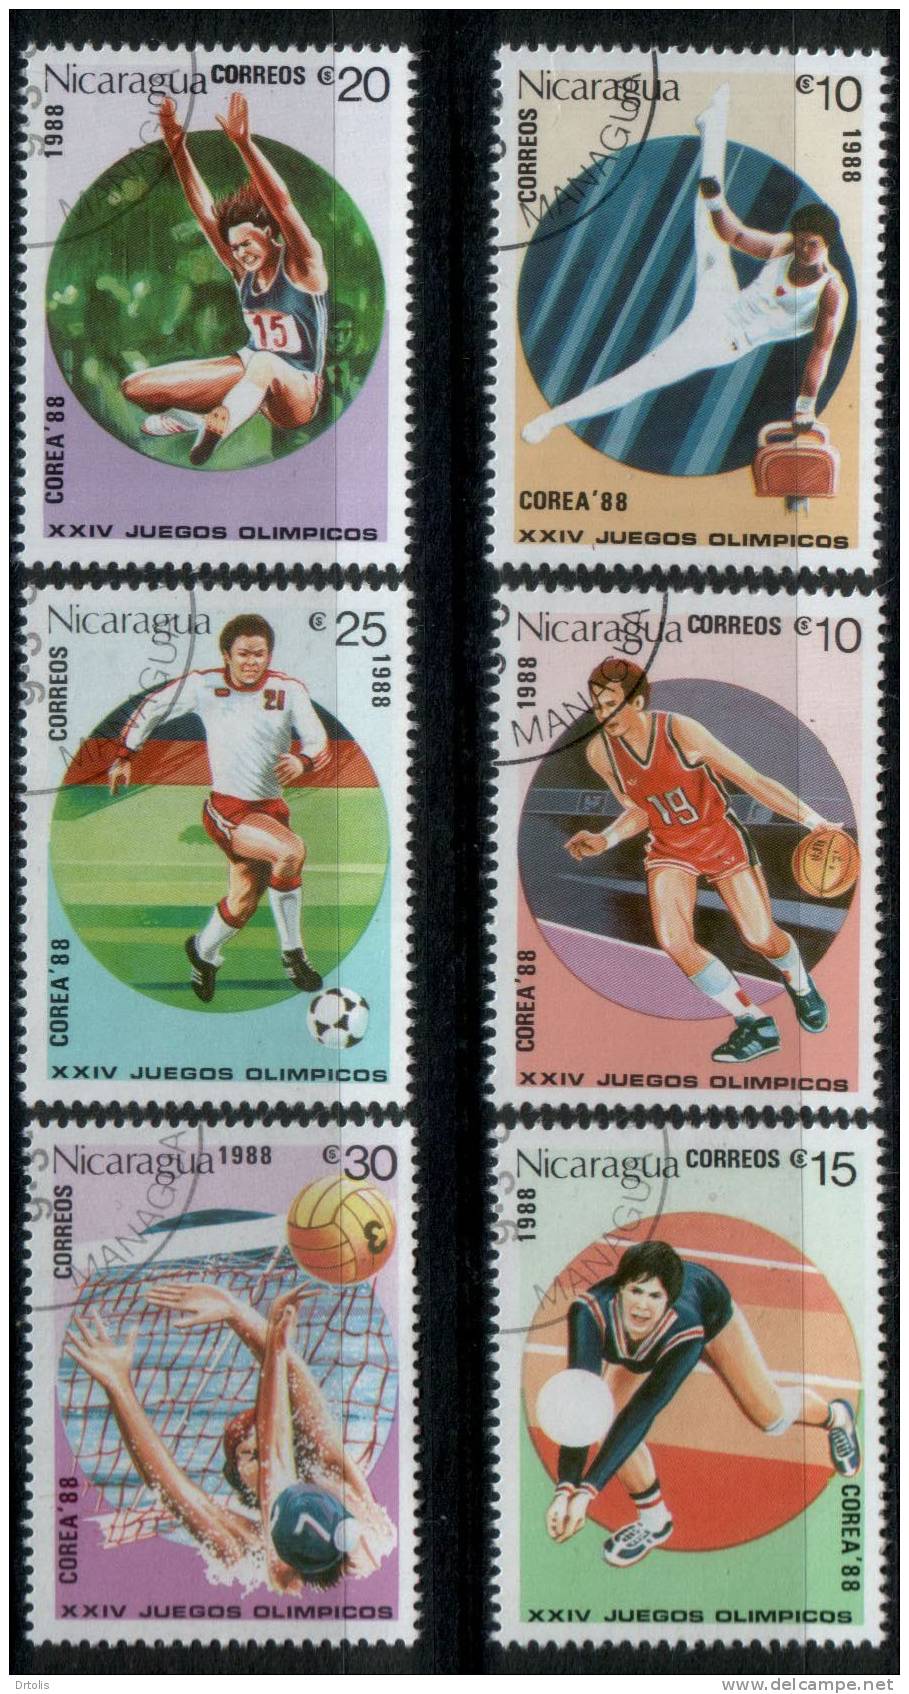 NICARAGUA / SEOUL 88 / GYMNASTICS;BASKETBALL;VOL LEYBALL;LONG JUMP;SOCCER;WATER POLO/ VF/ 2 SCANS - Zomer 1988: Seoel